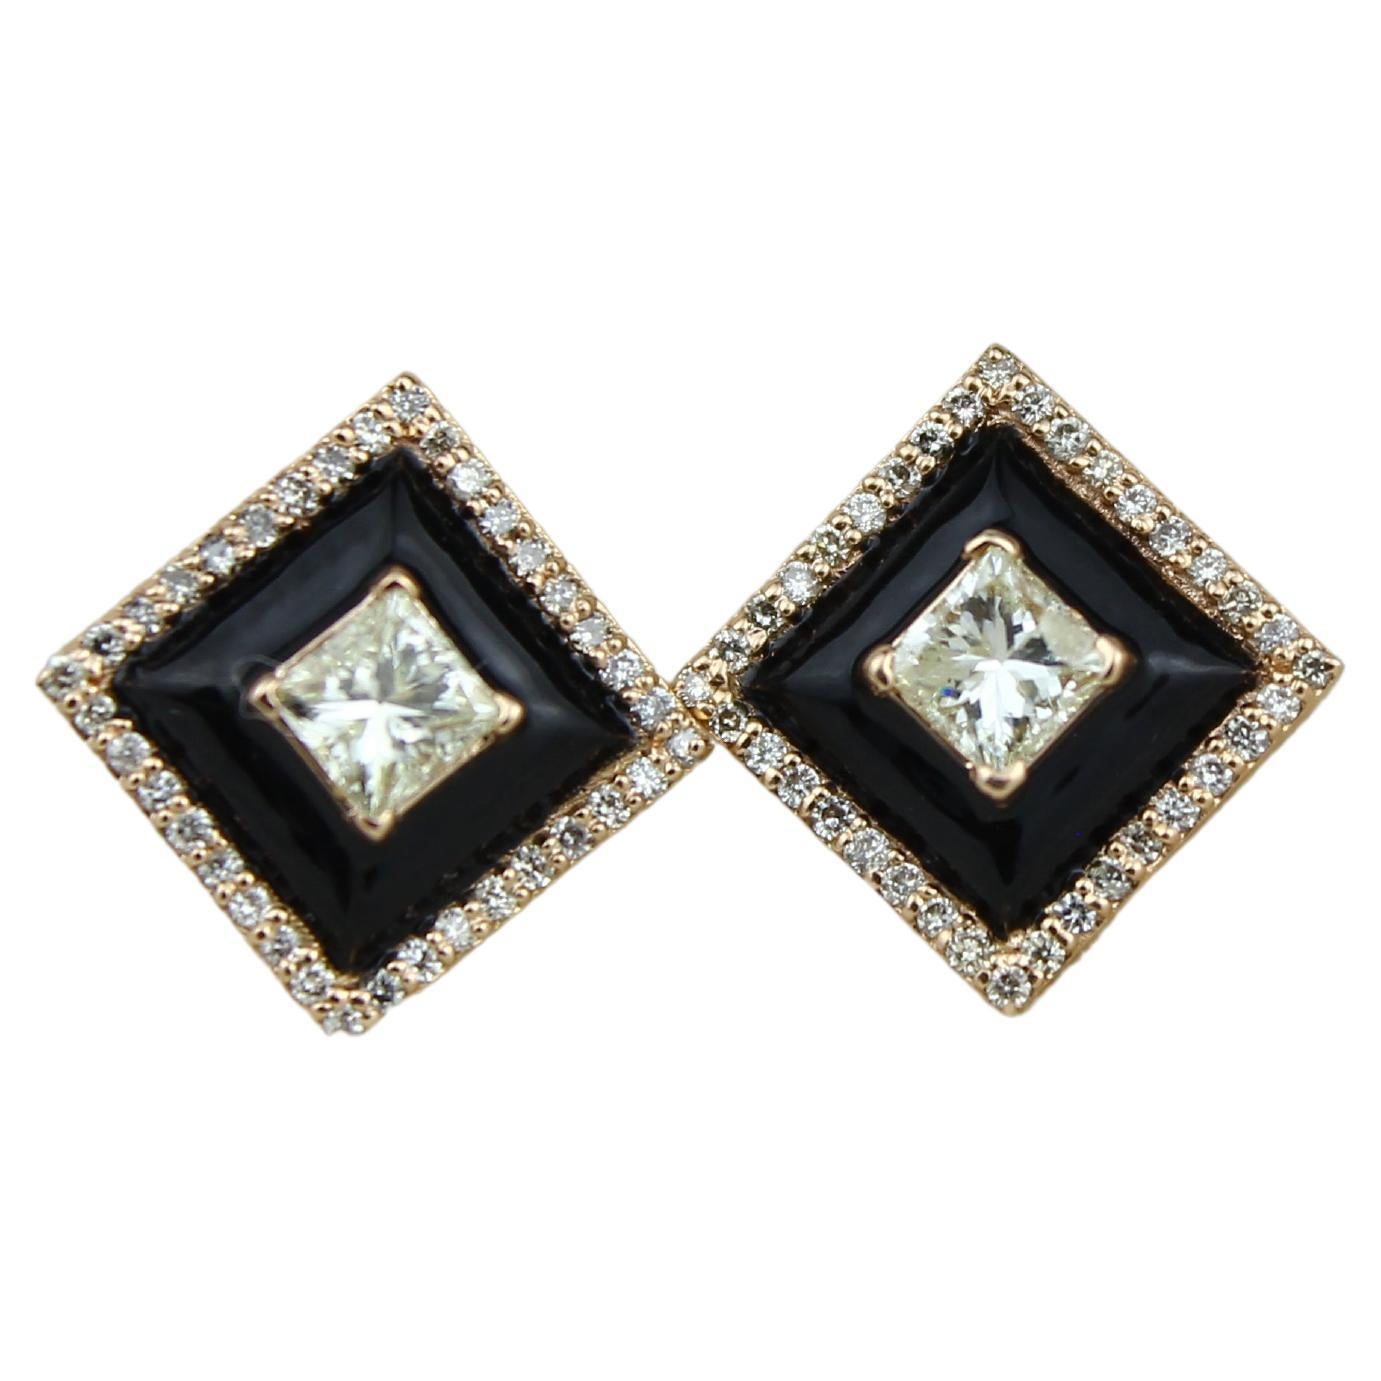 Black Enameled Stud Earrings with Princess Diamonds in 18k Solid Gold